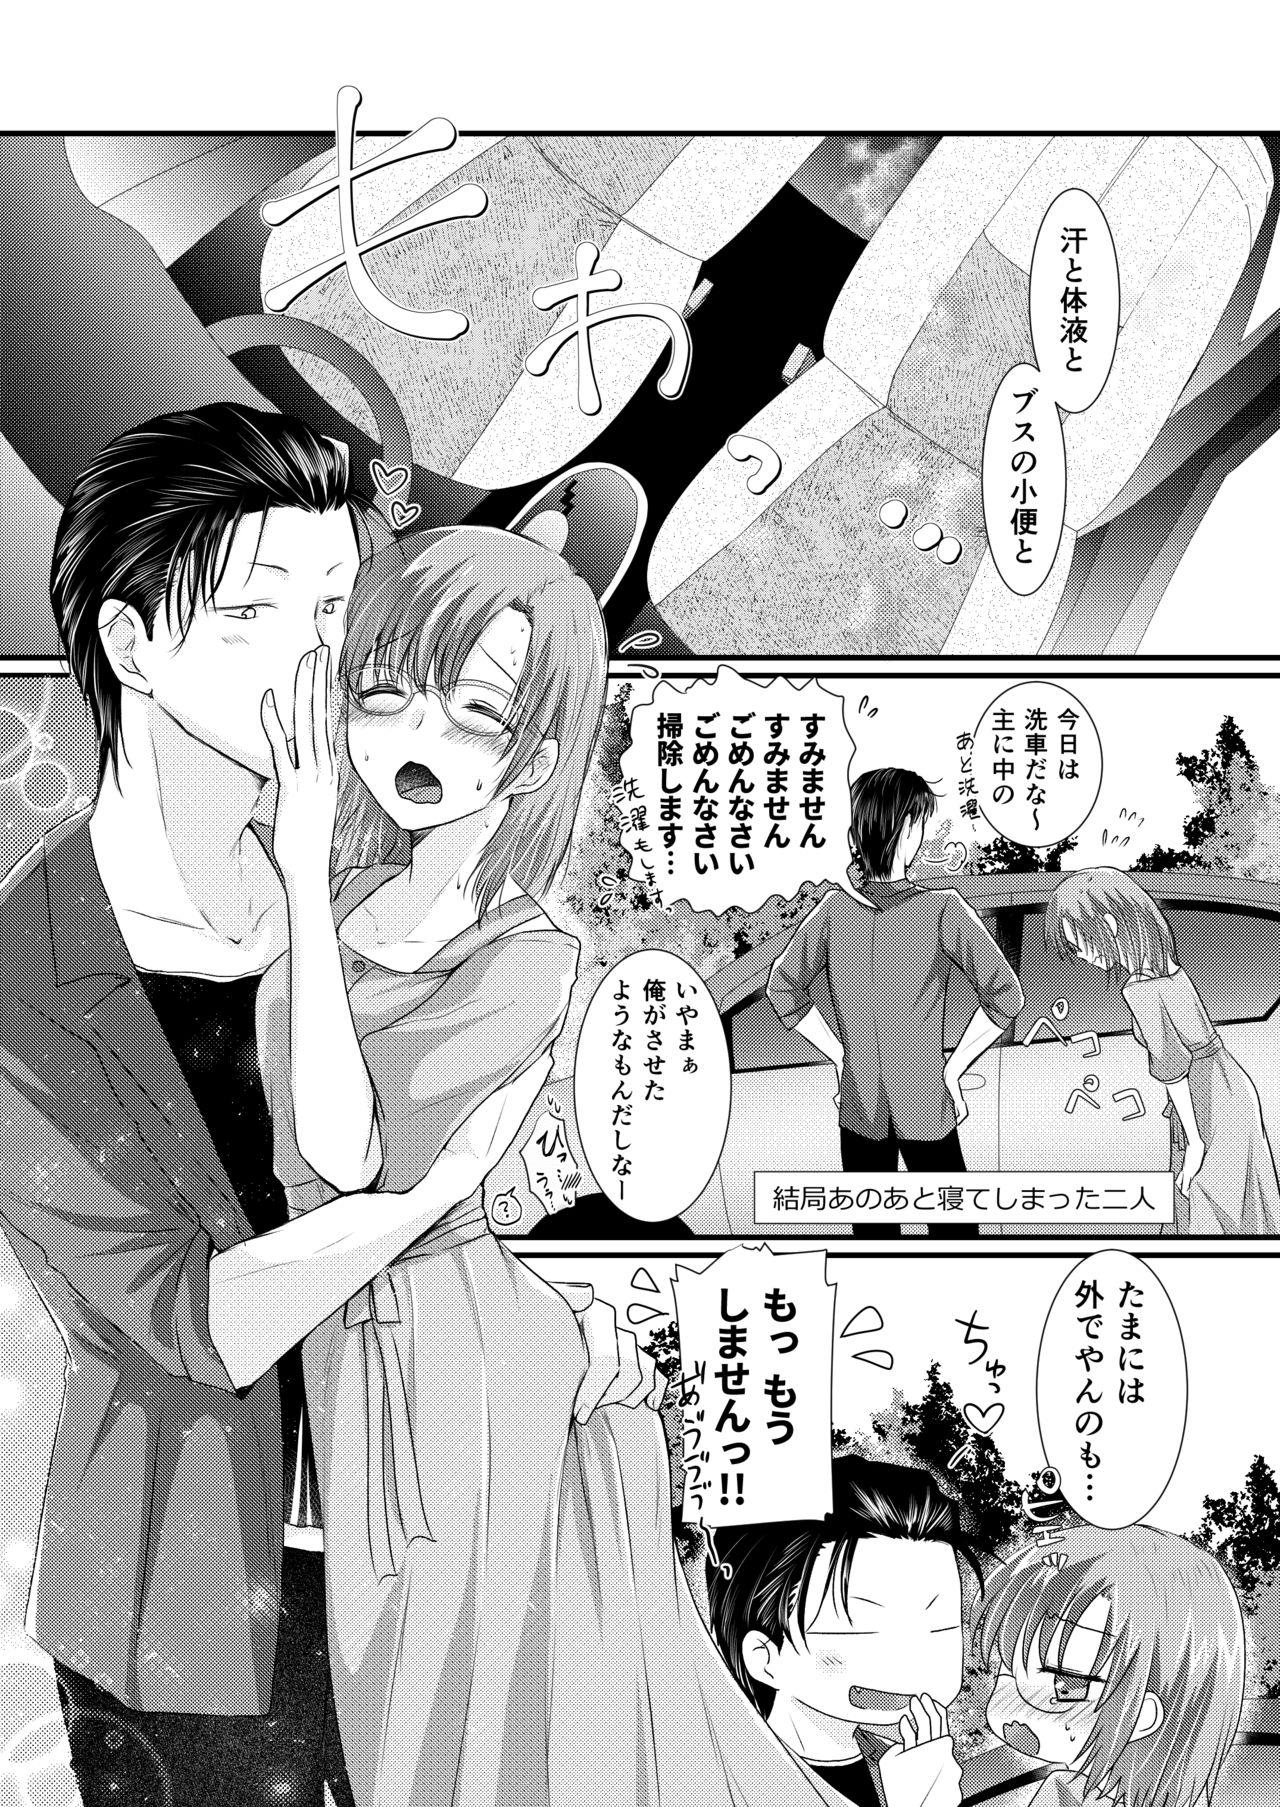 Seijin Muke Manga 16p 16